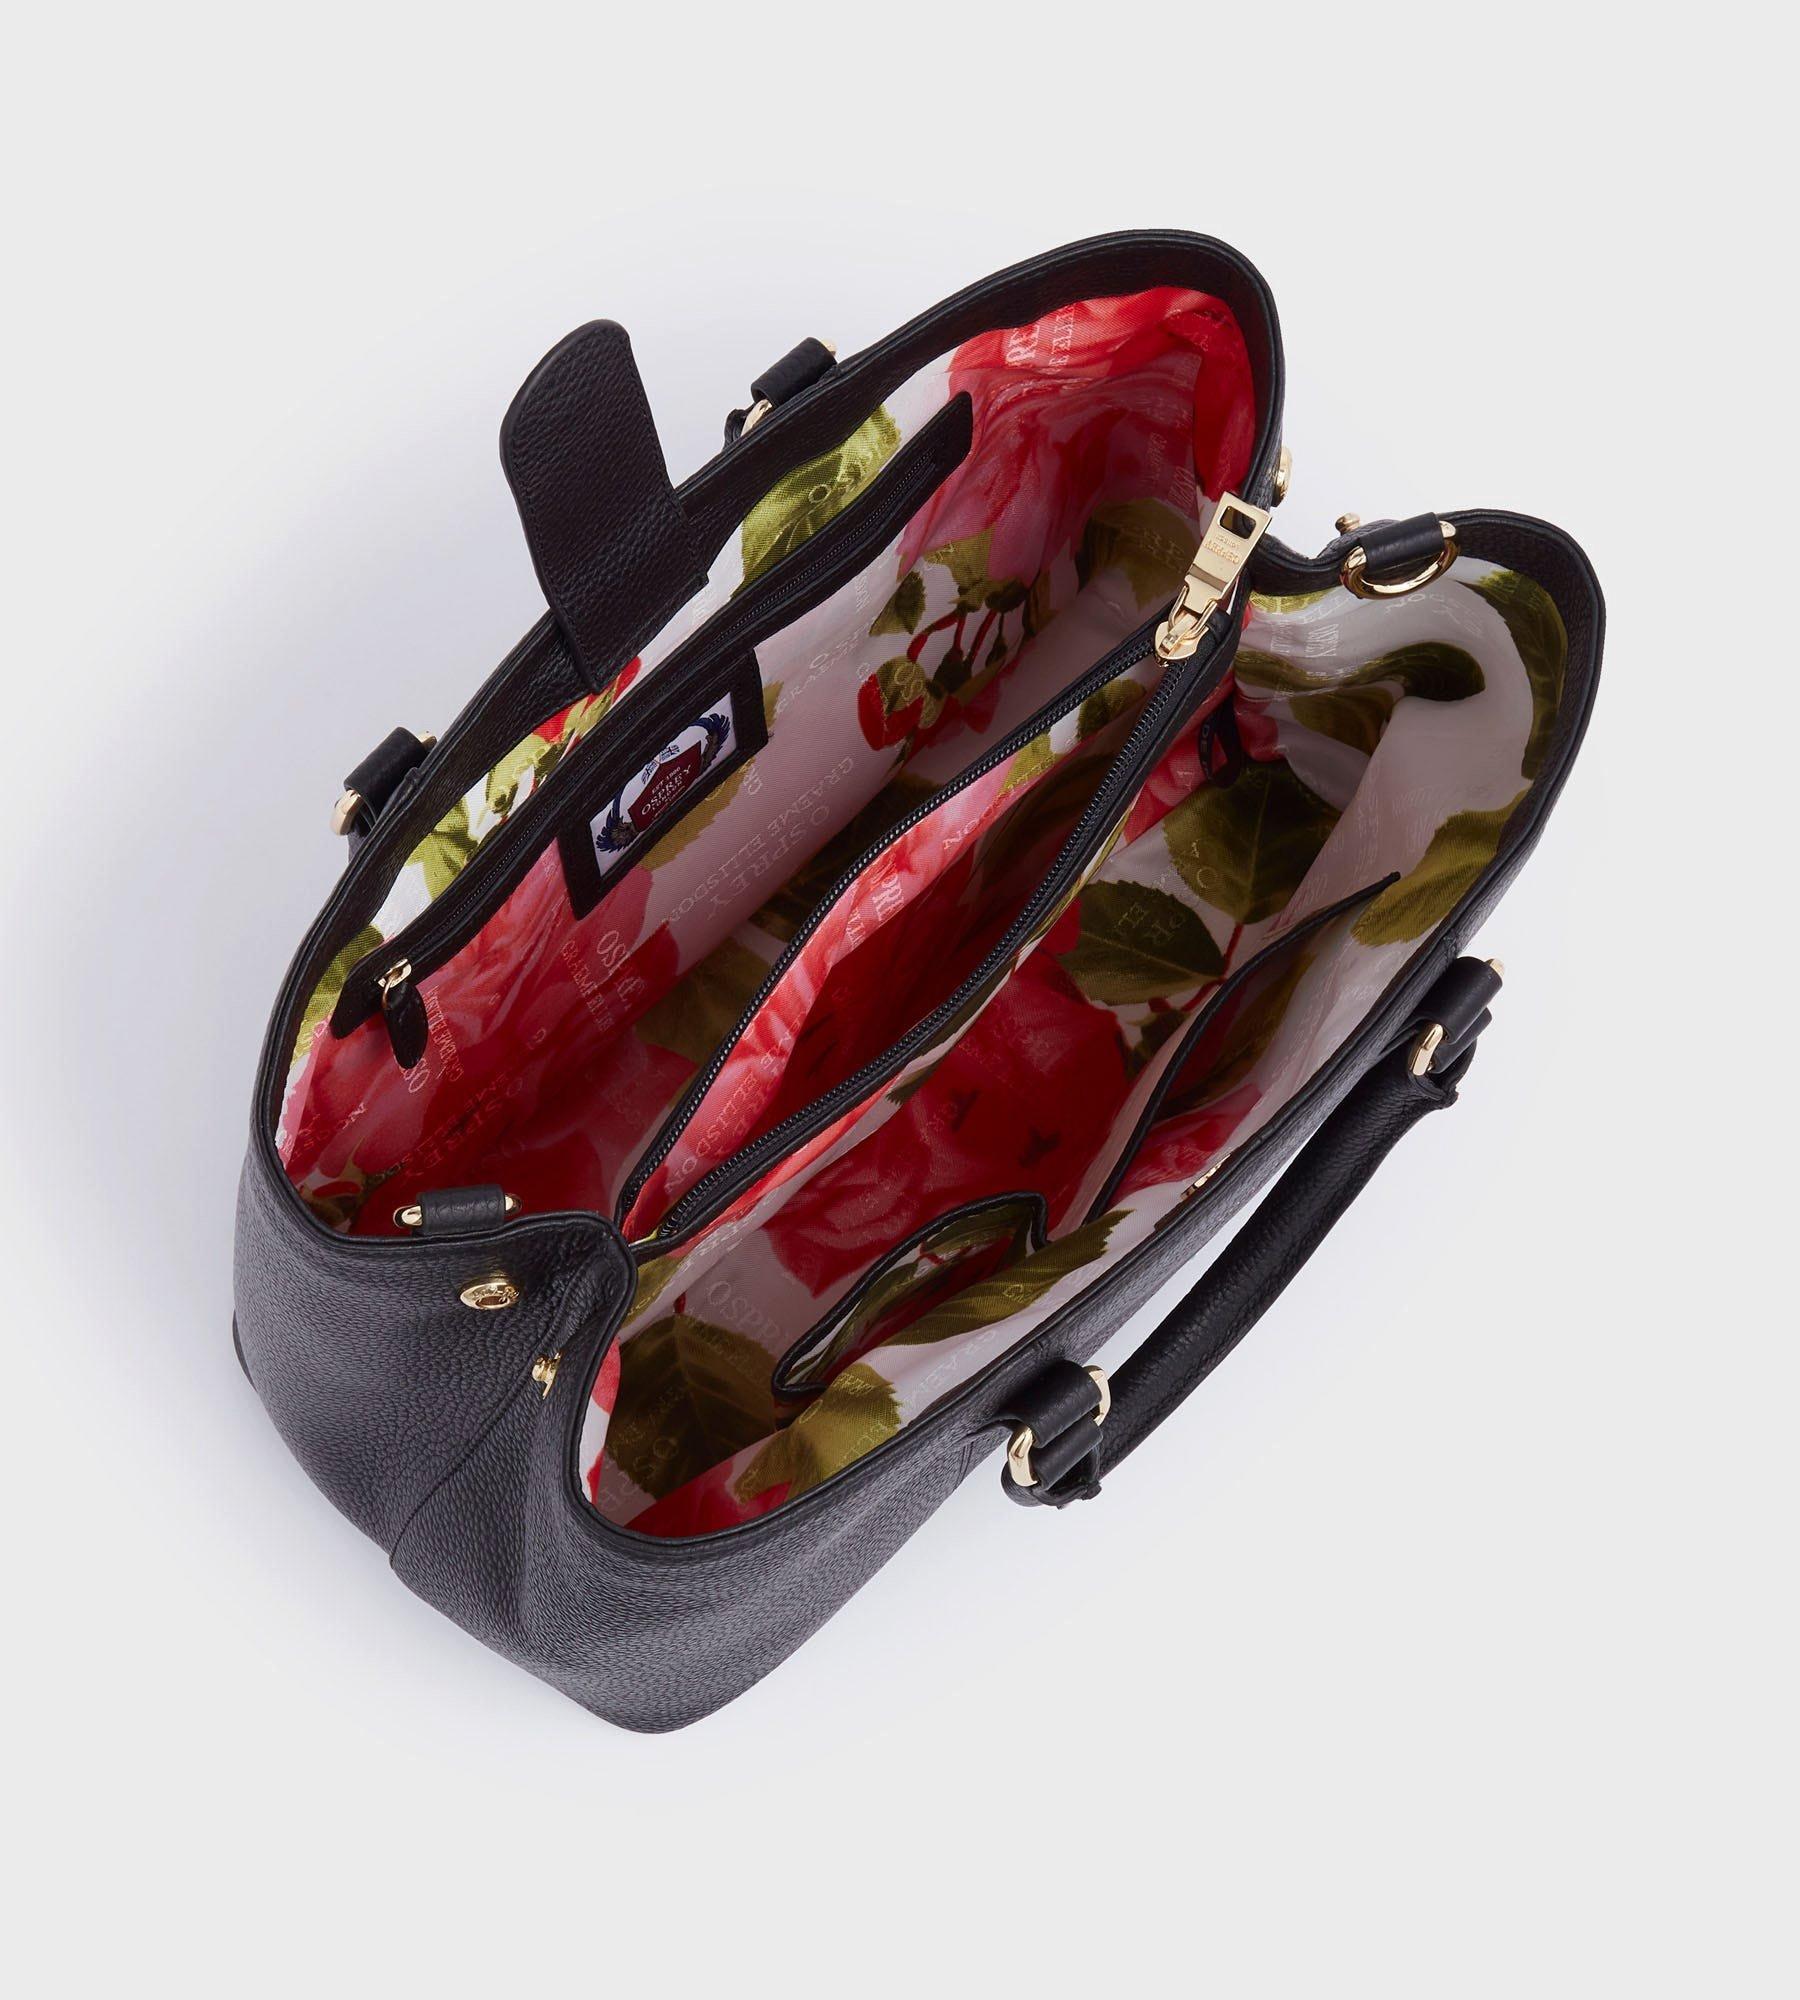 Osprey bag | Handbags, Purses & Women's Bags for Sale | Gumtree